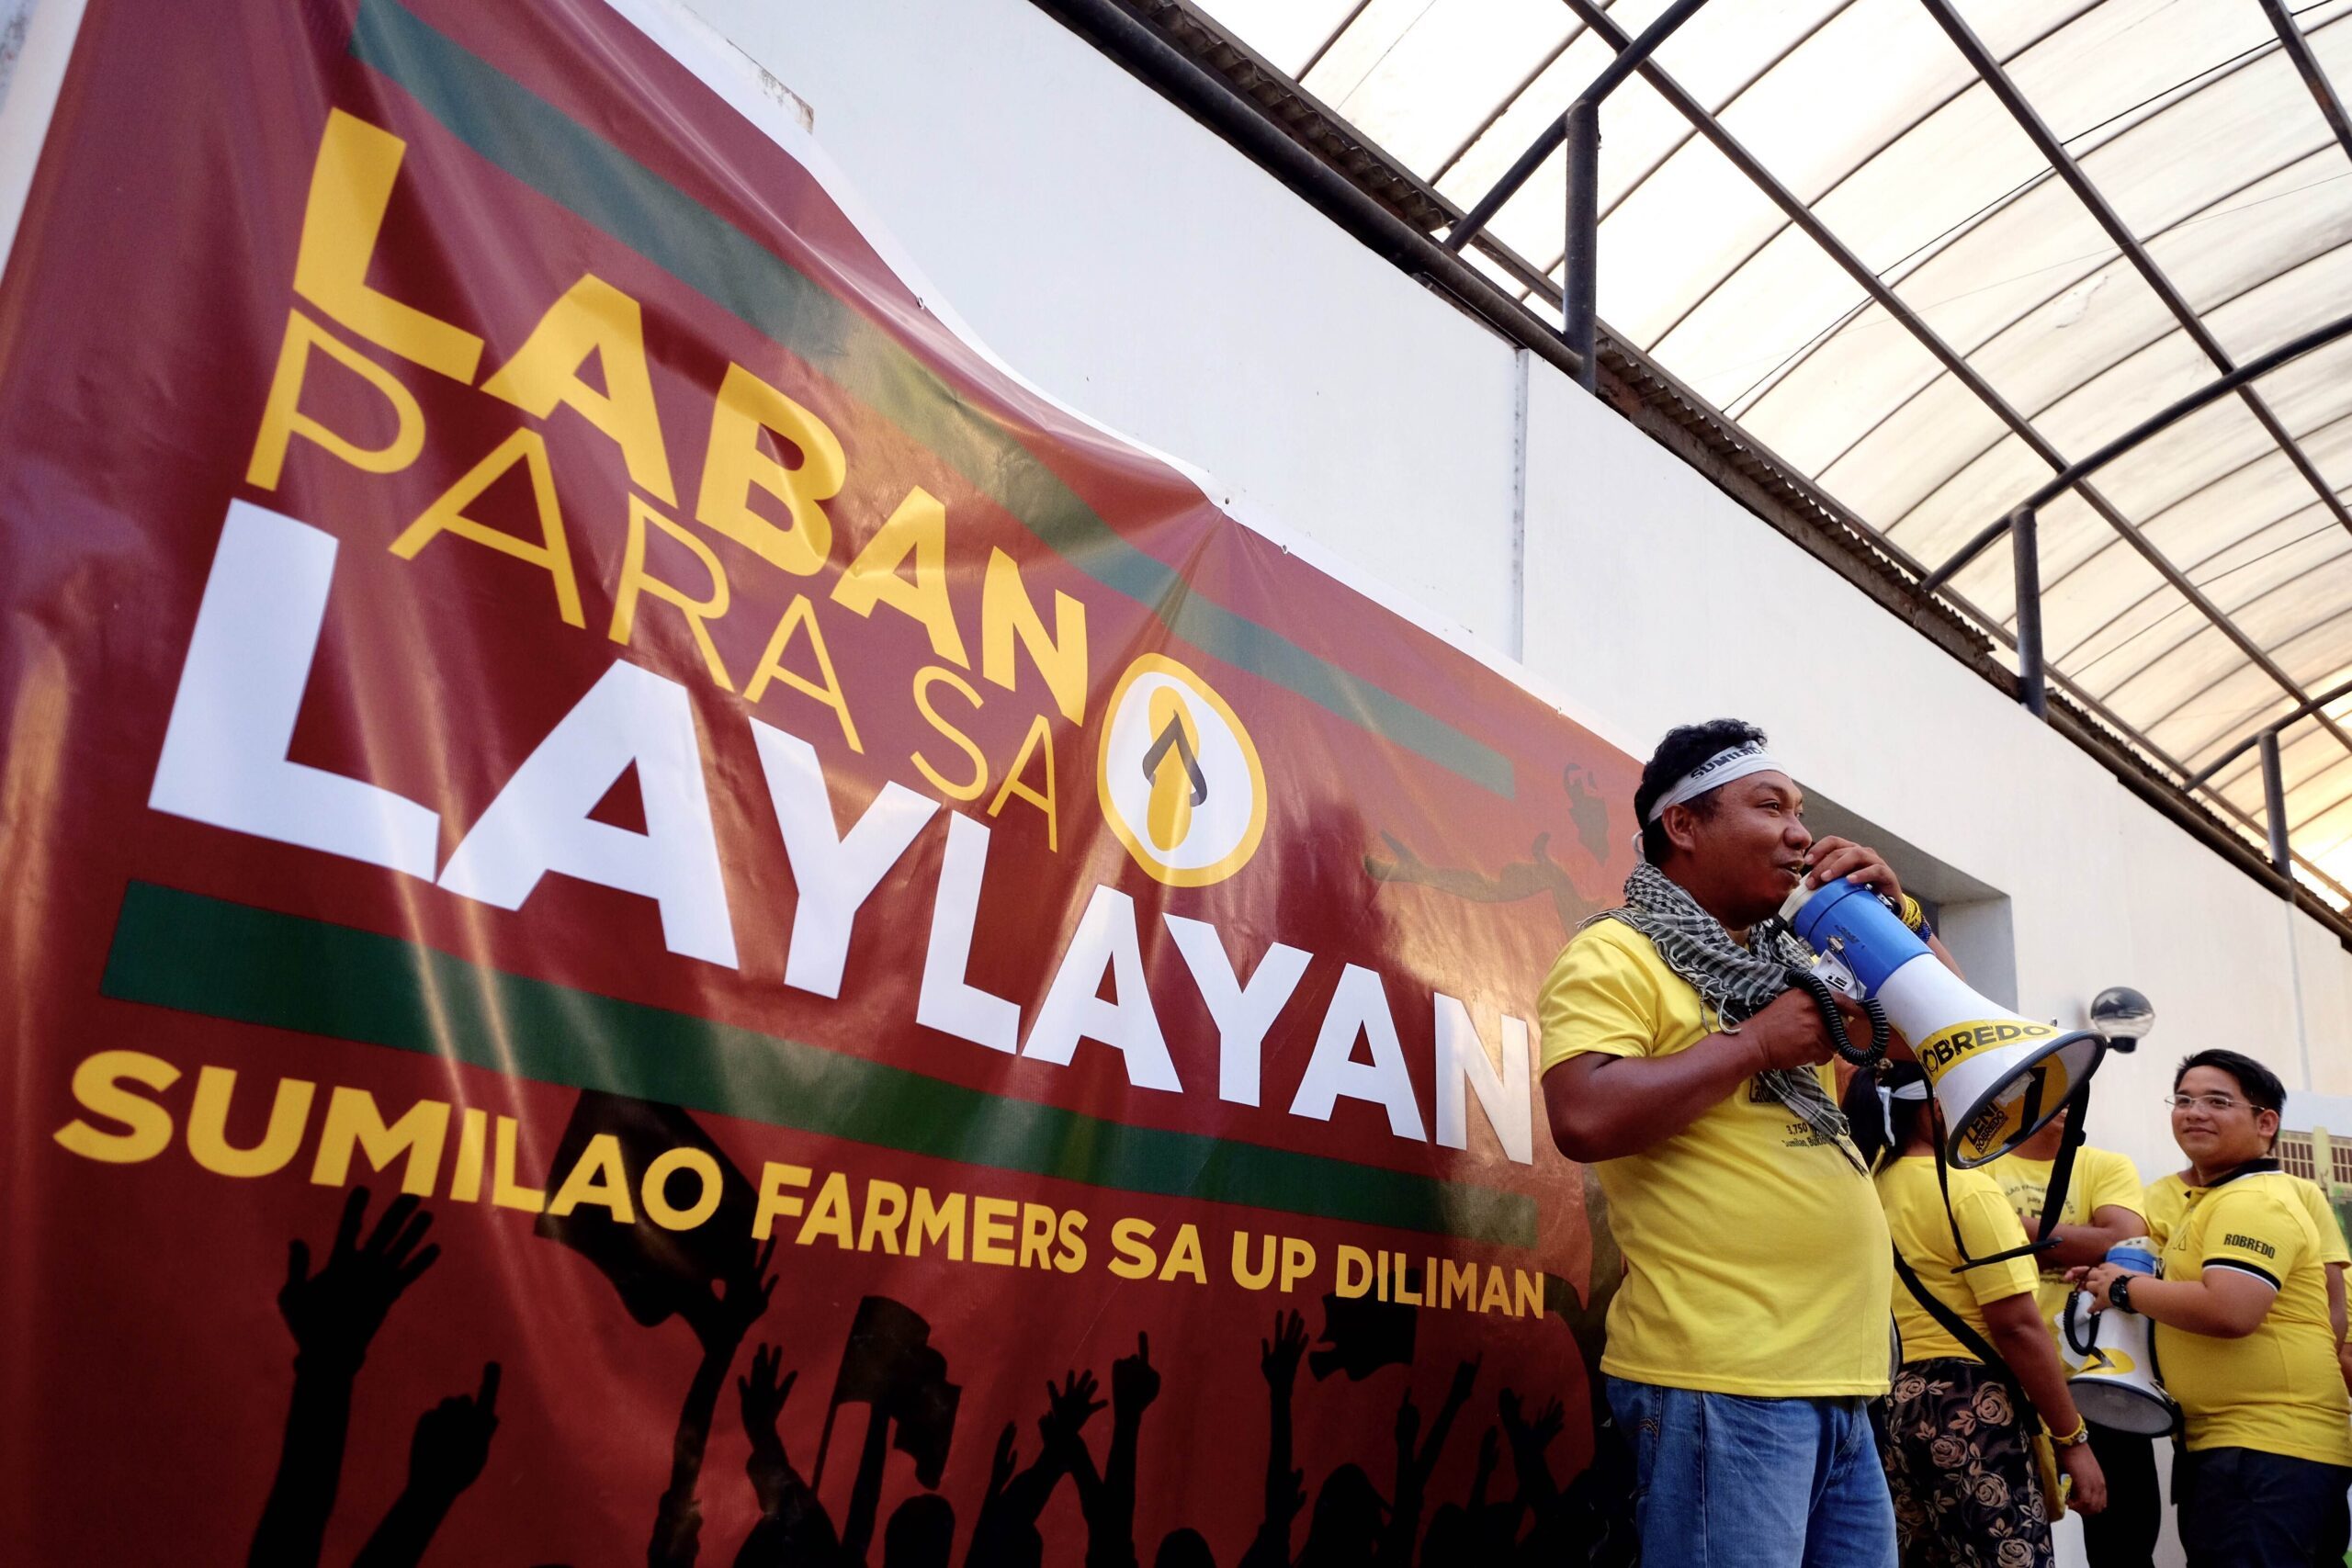 Sumilao farmers: 2016 polls also a fight for a better future